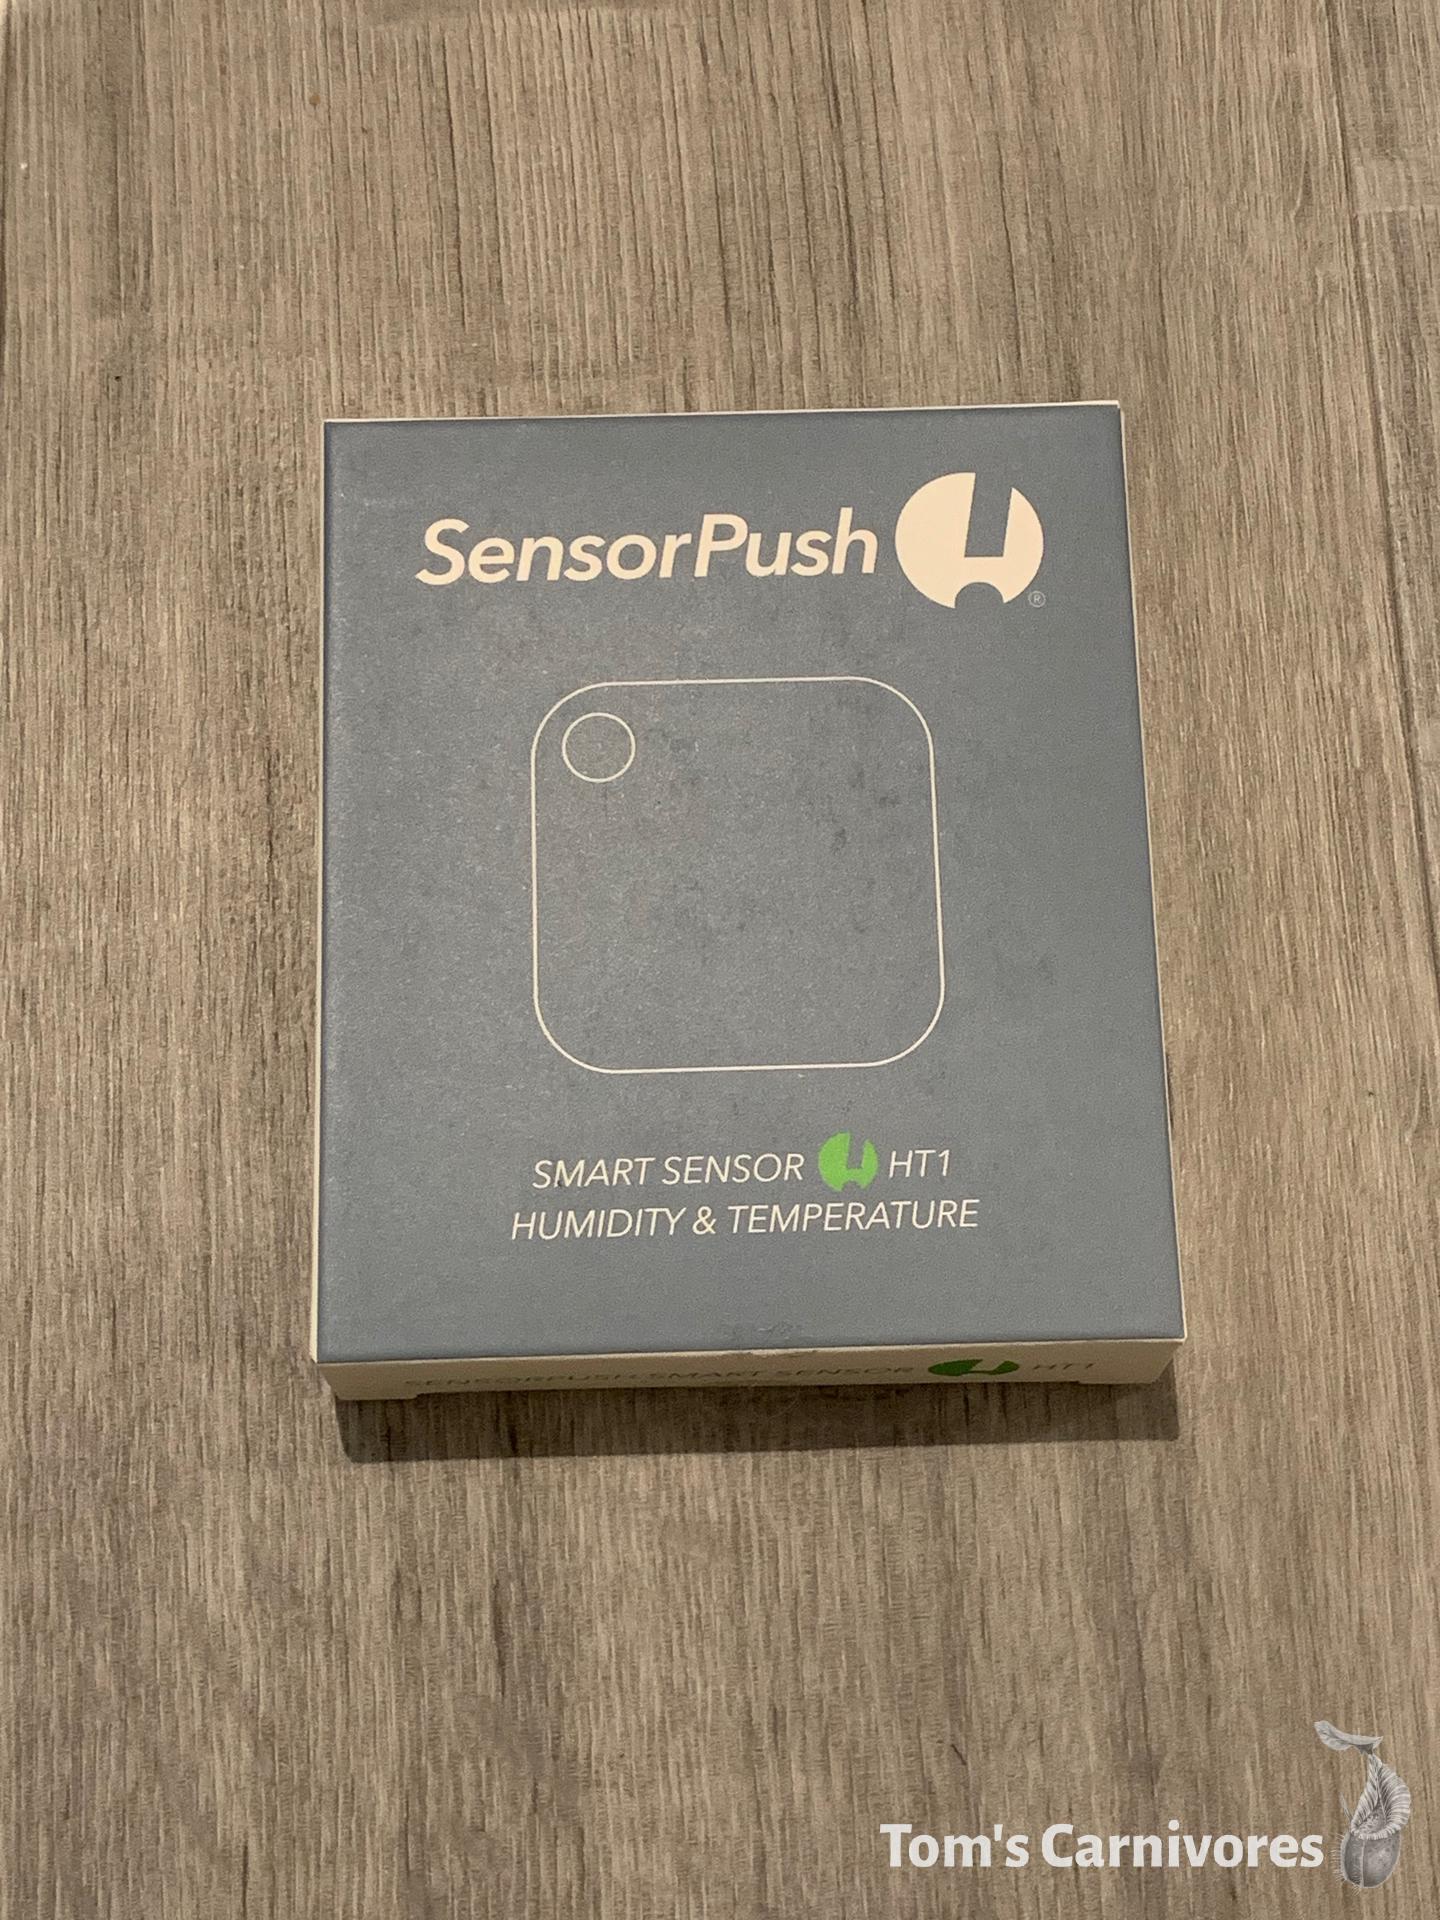 Sensor Push Smart Sensor Comparison